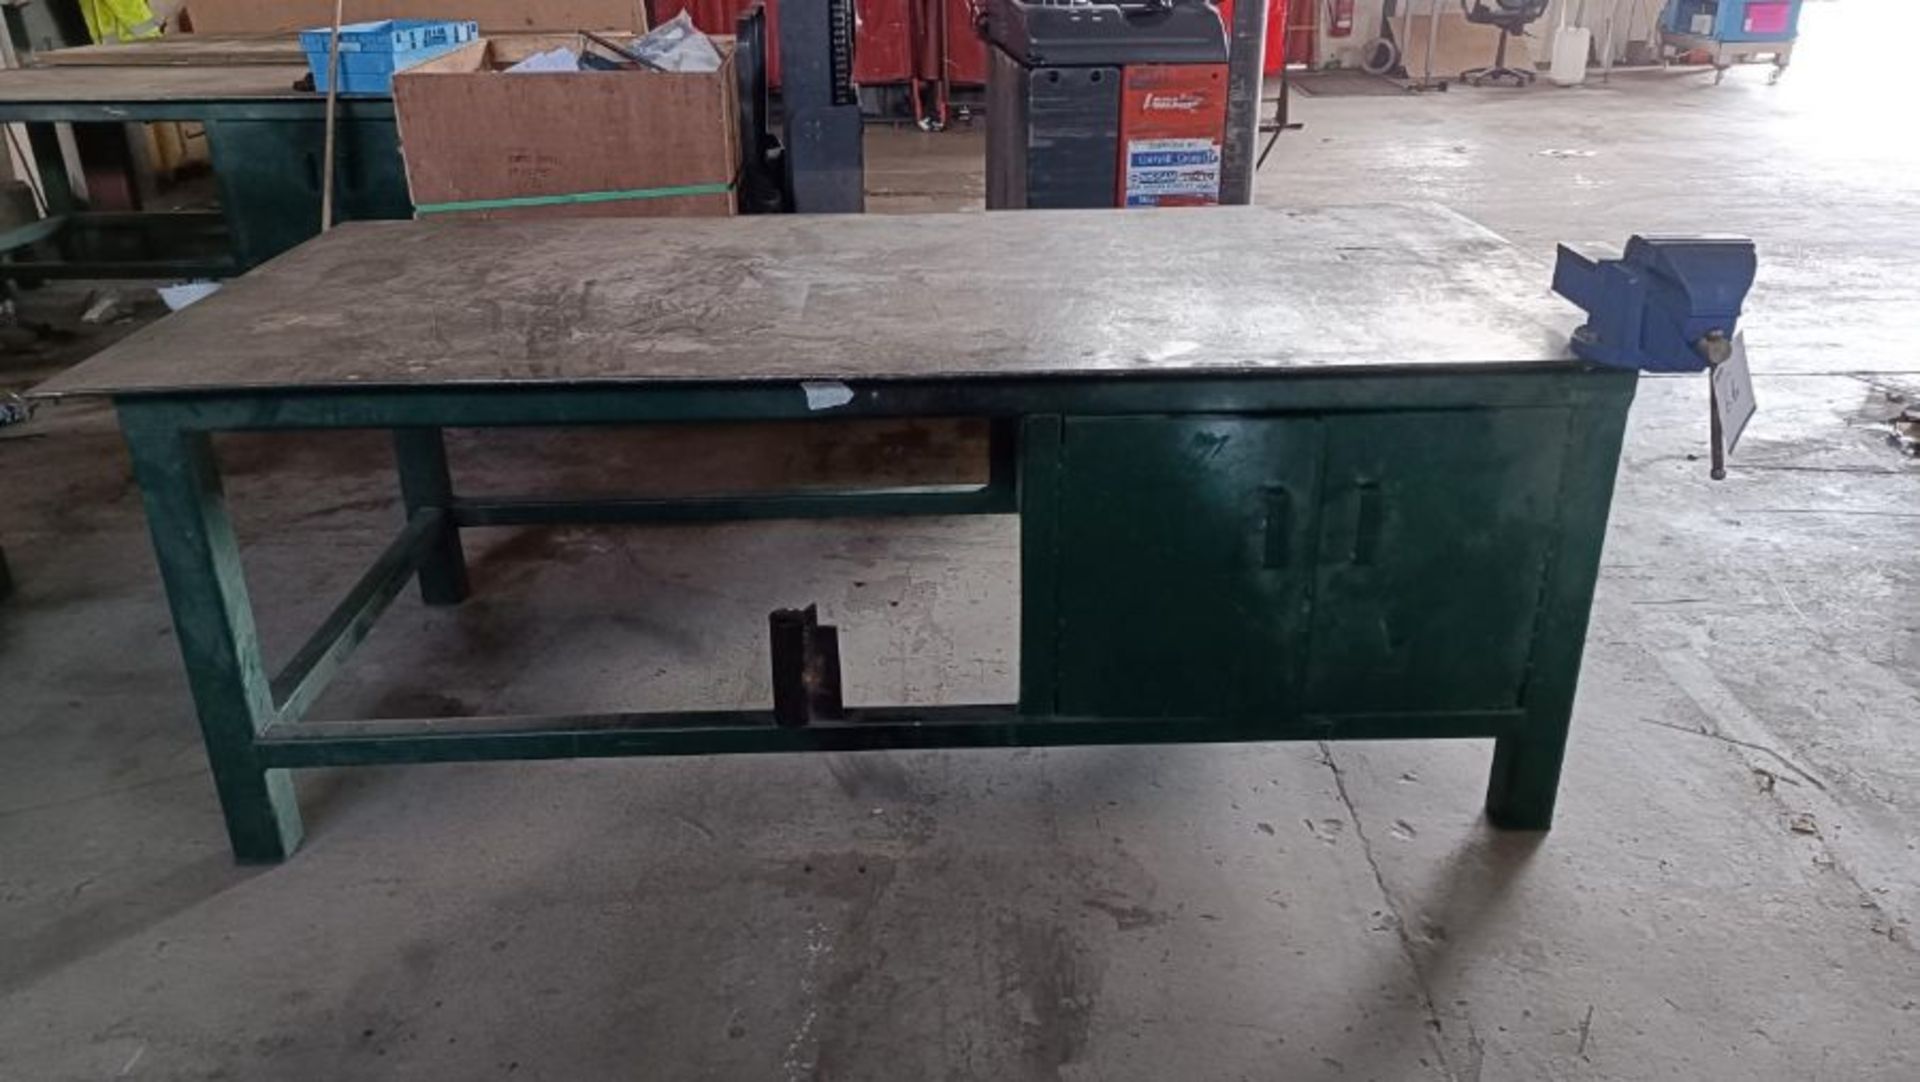 Steel work bench, vice